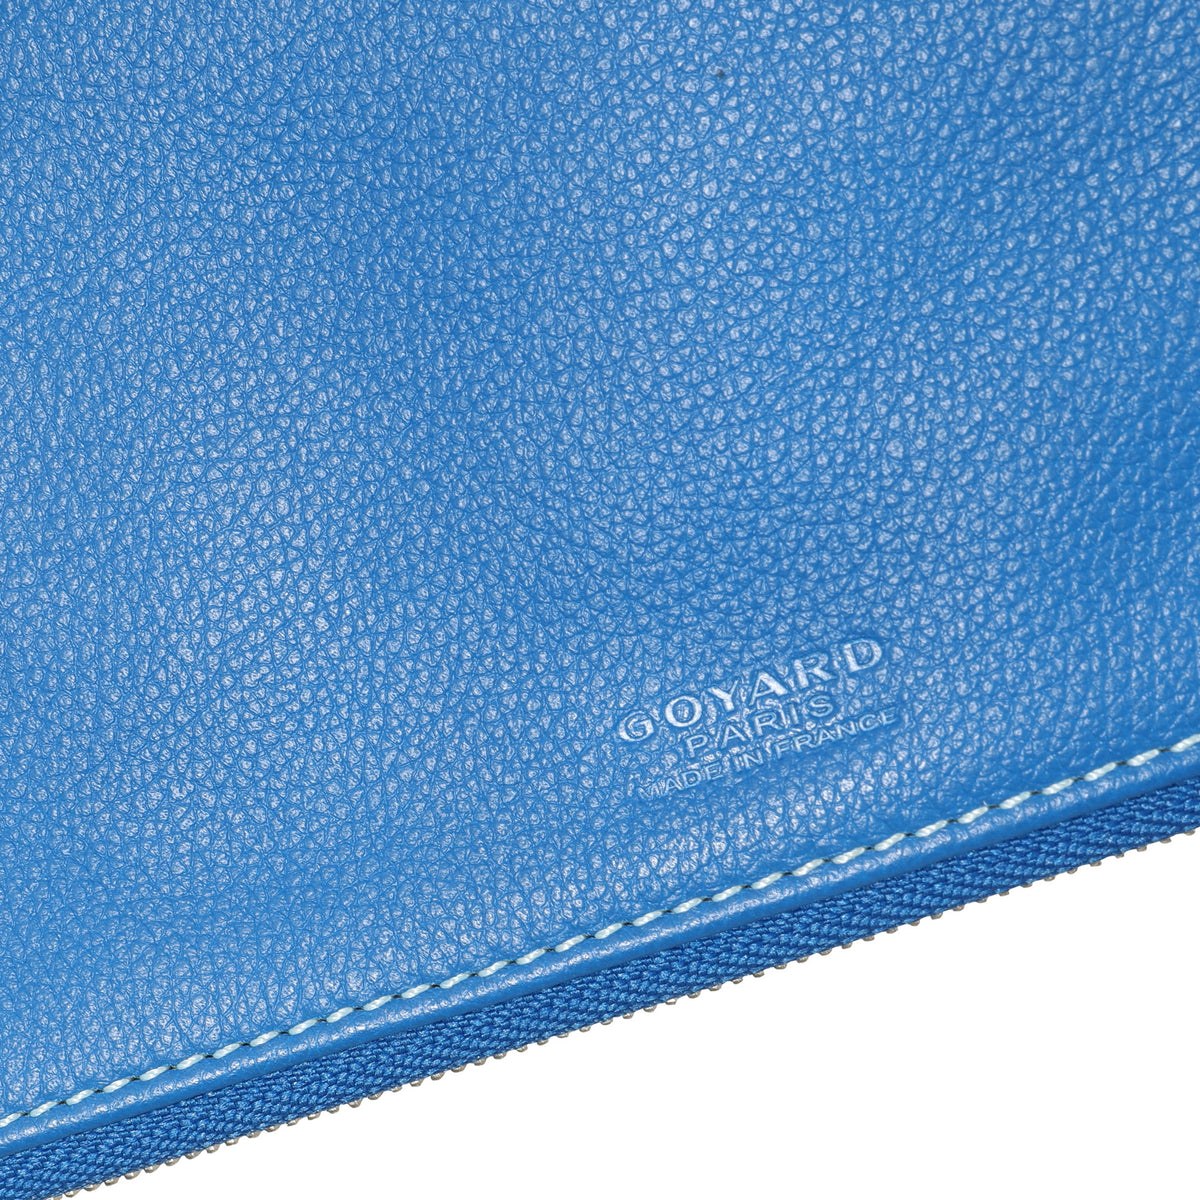 Goyard Saint Marie Royal Blue Canvas Leather Clutch Bag